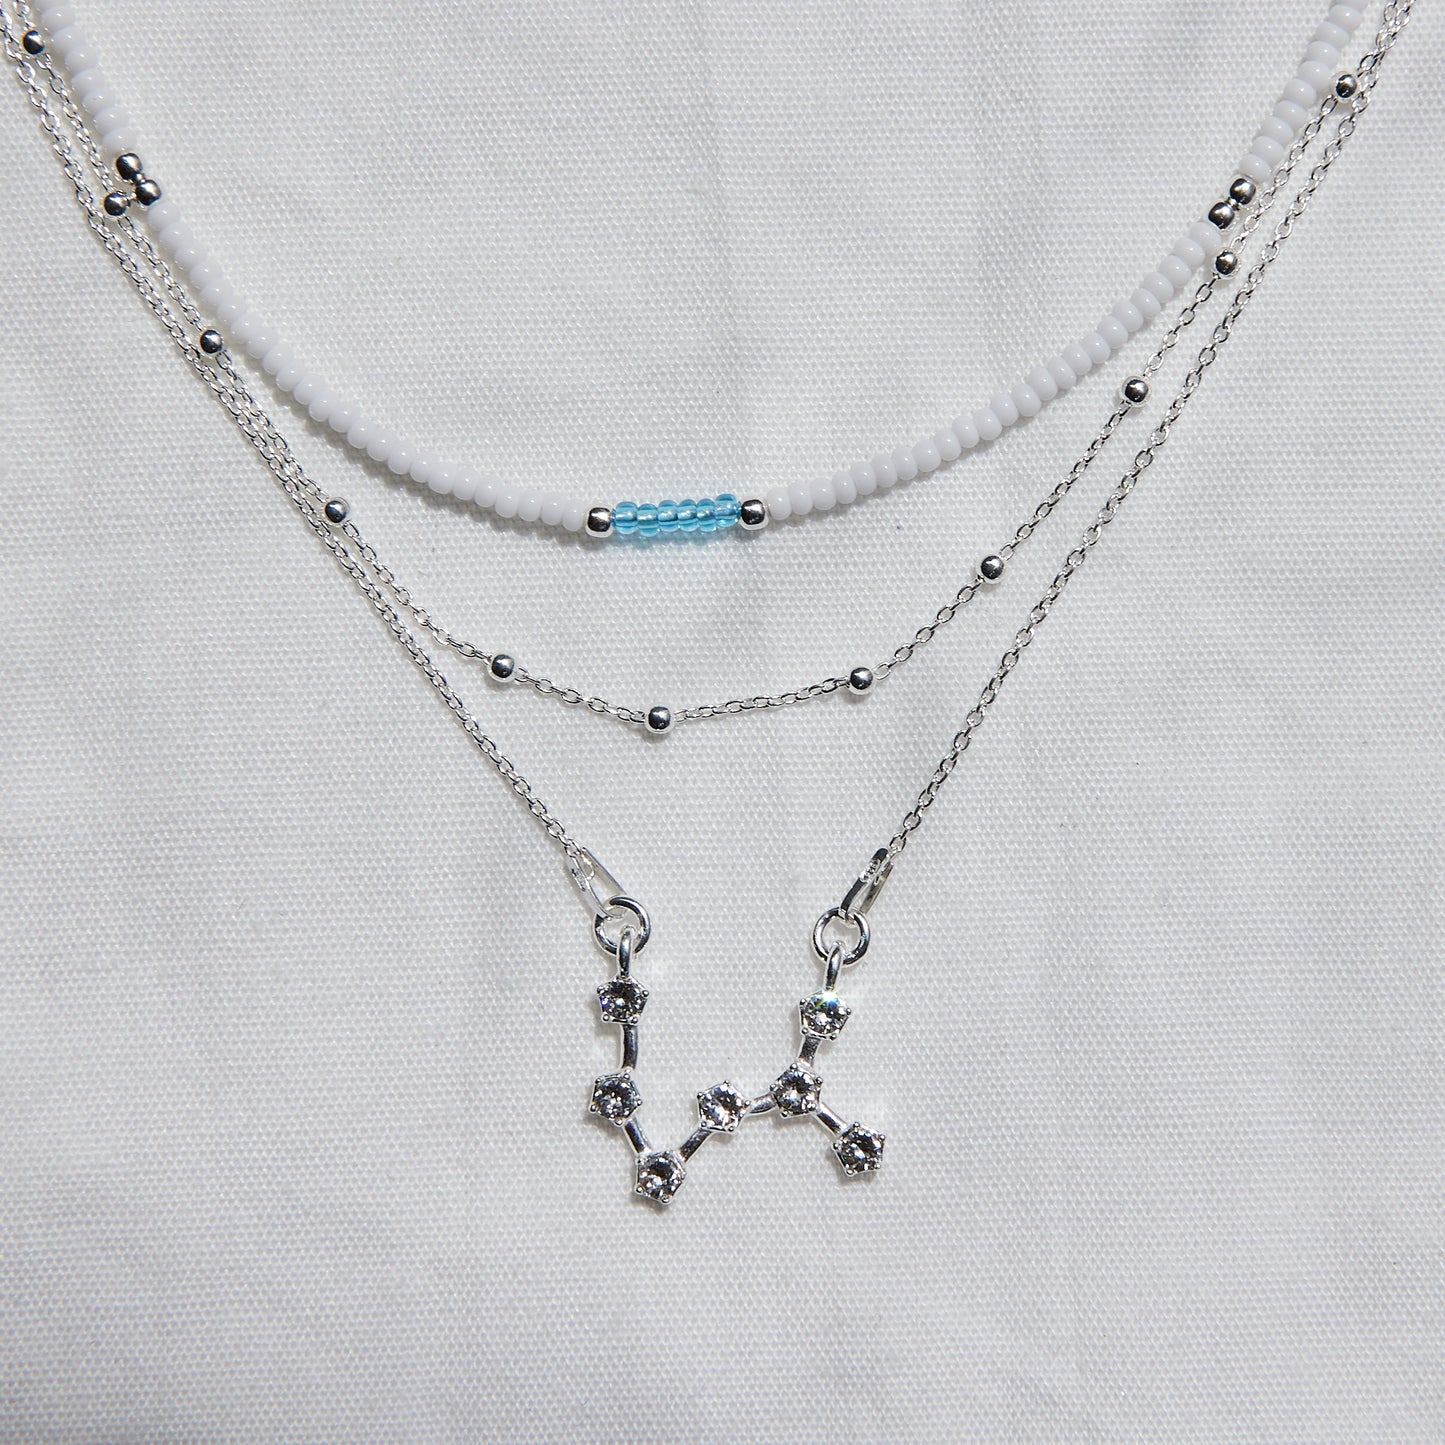 Seablue beaded necklace